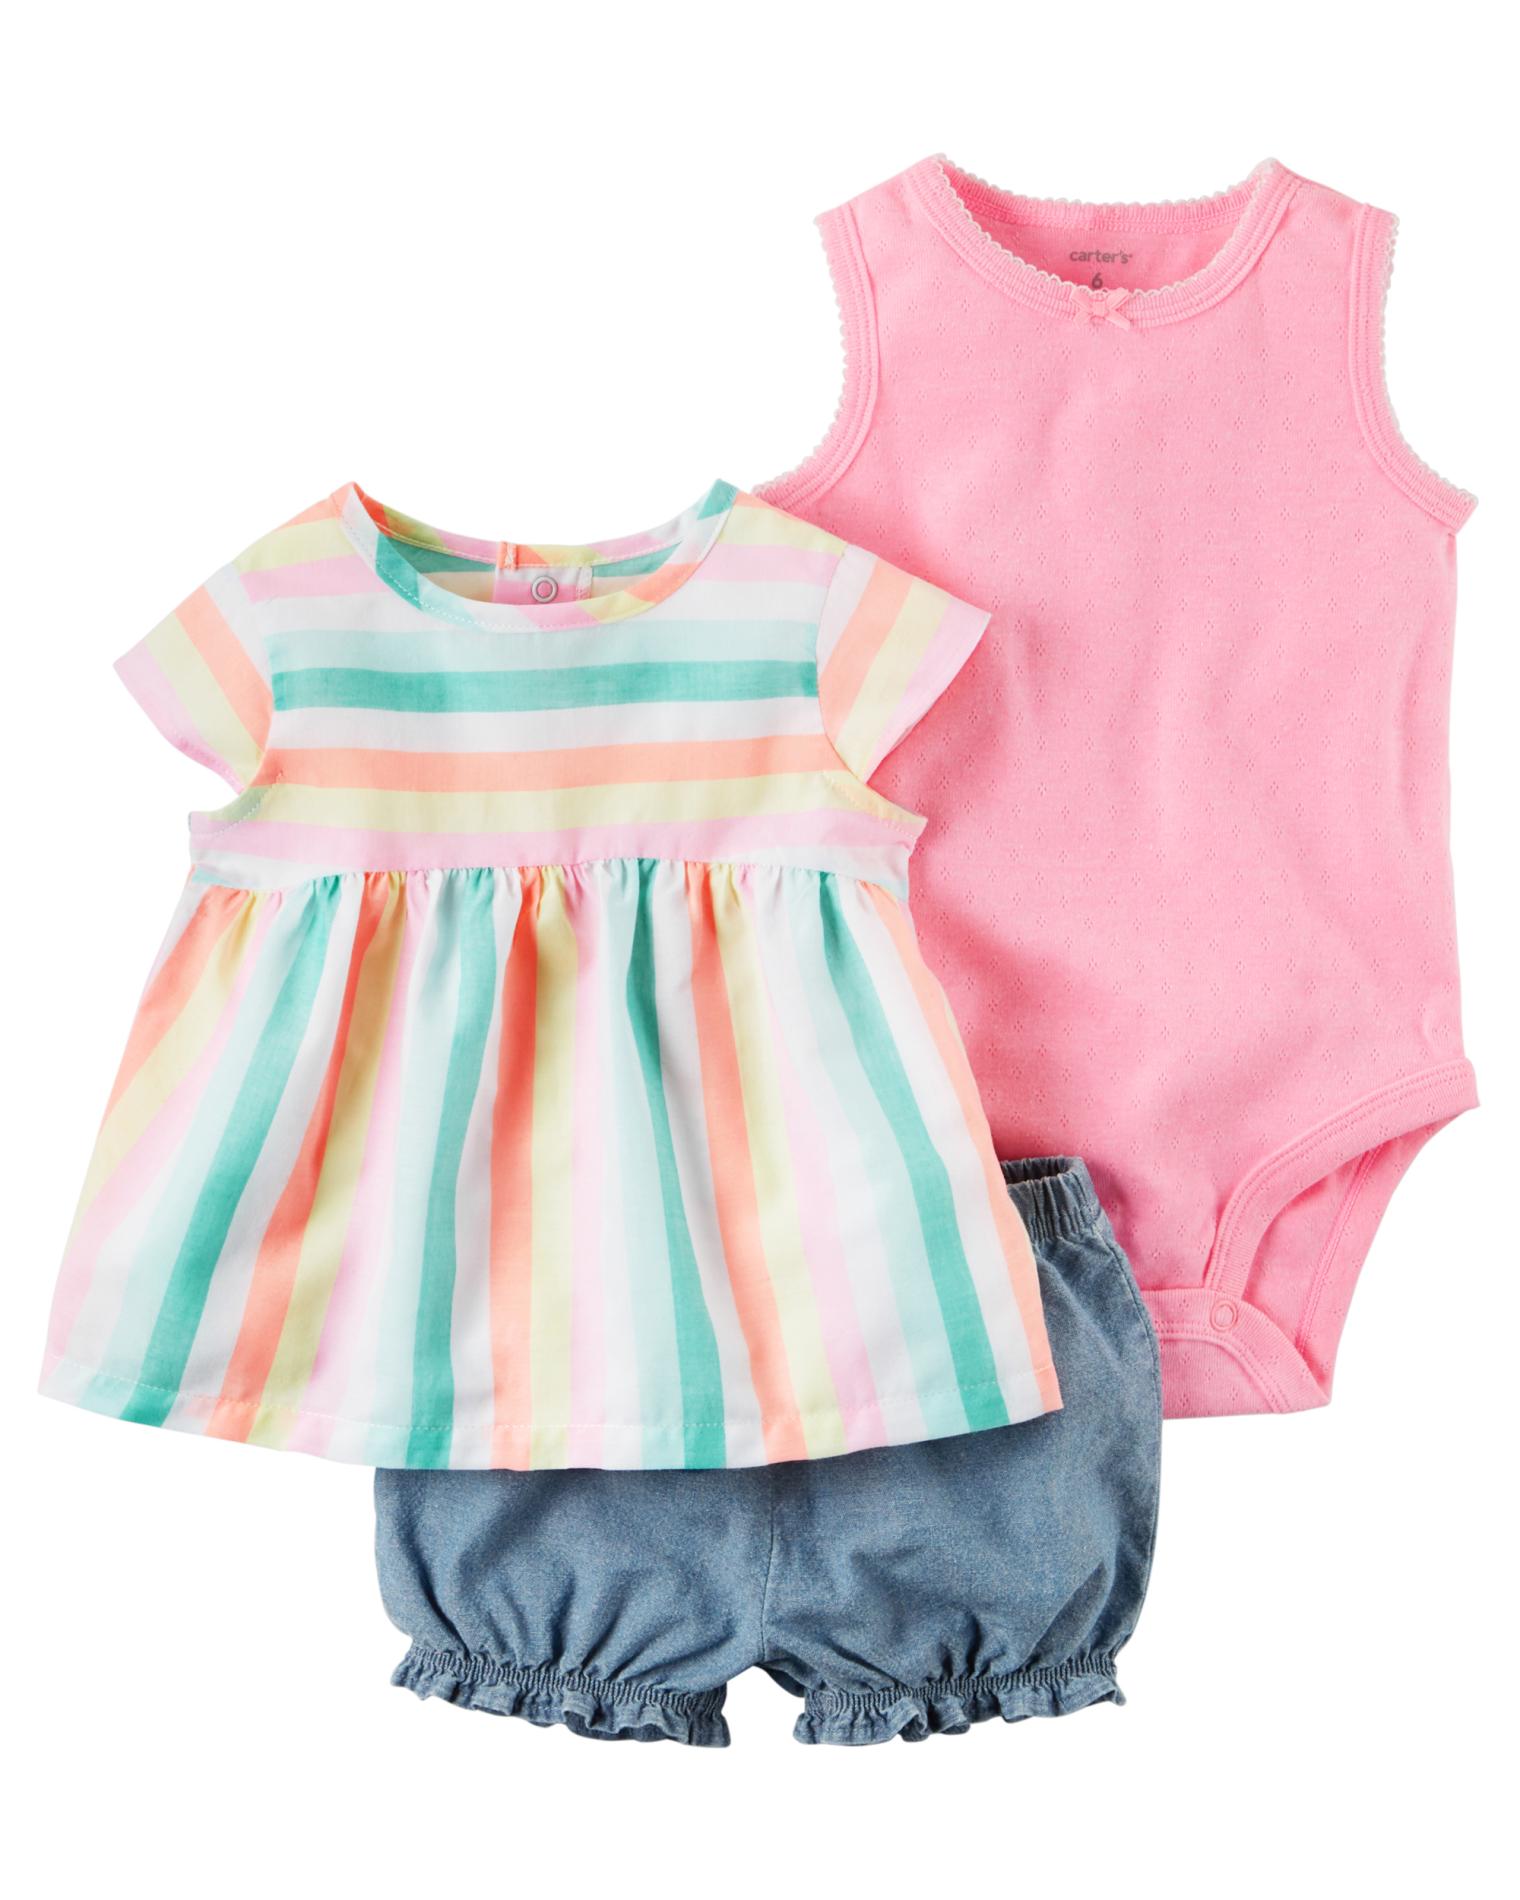 Carter's Newborn & Infant Girls' Bodysuit, Top & Shorts - Striped